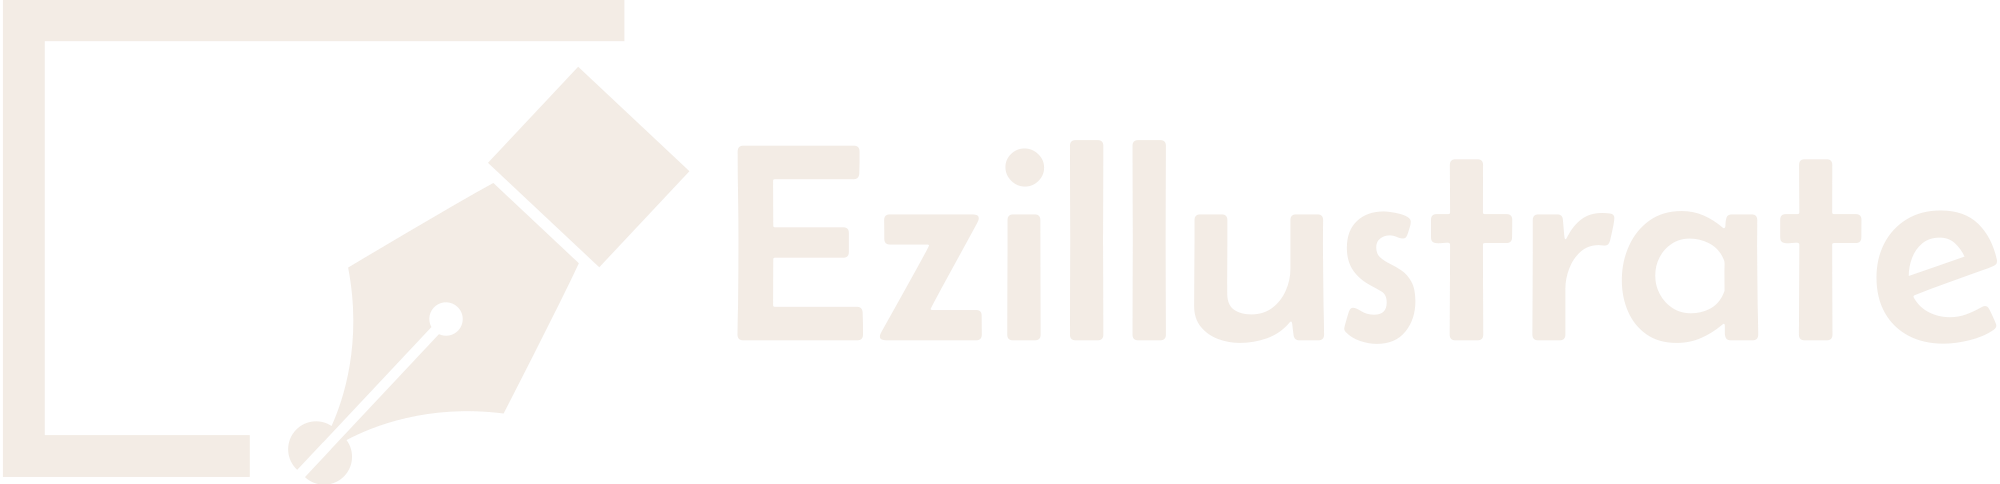 ezillustrate.com